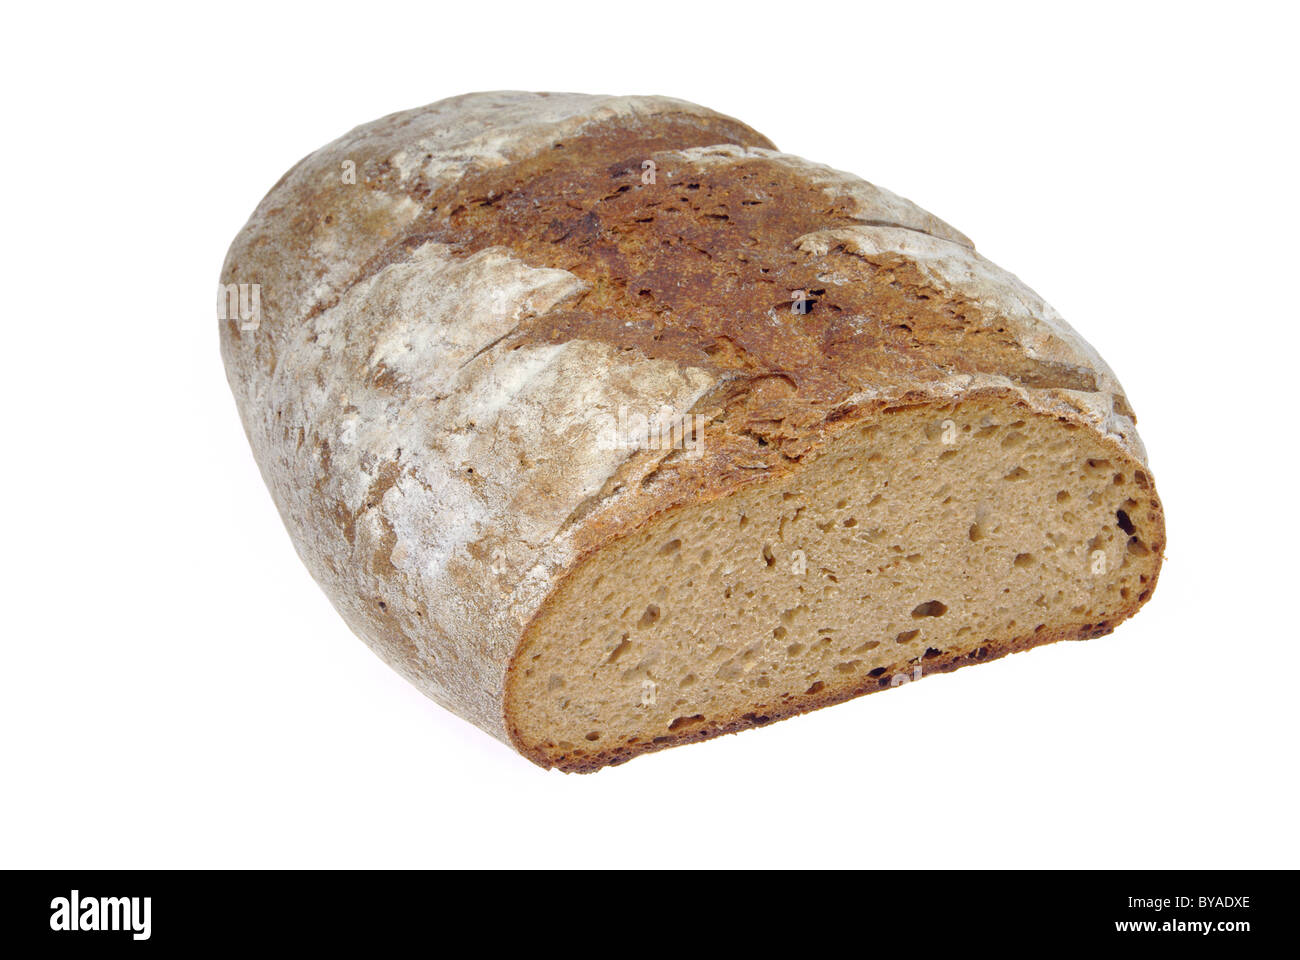 Brot - bread 04 Stock Photo